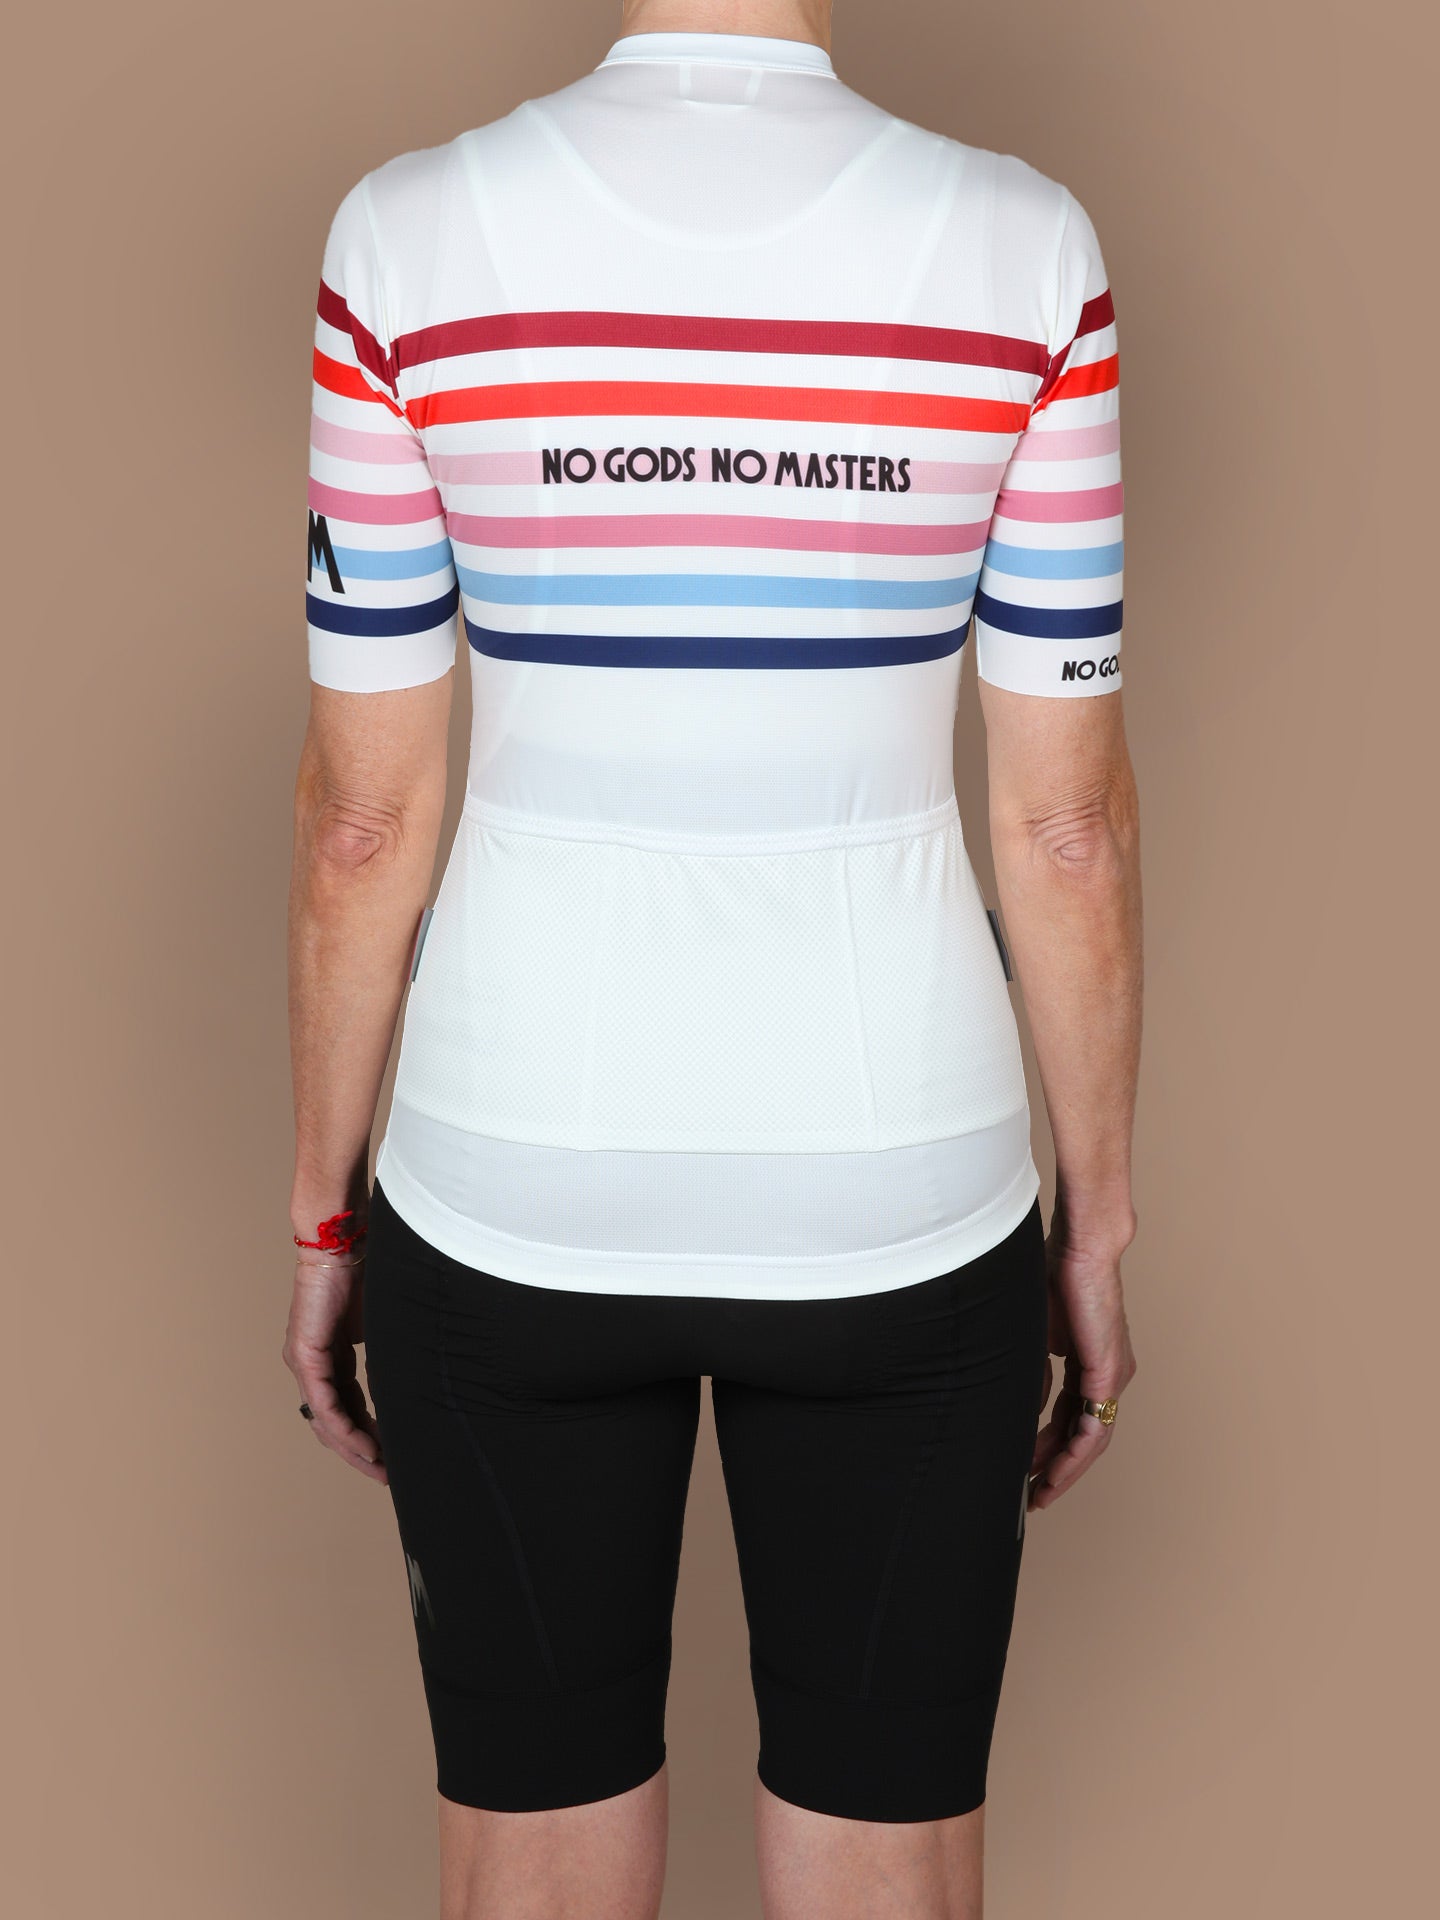 NGNM Stripes cycling jersey multicolour back black performance bib shorts